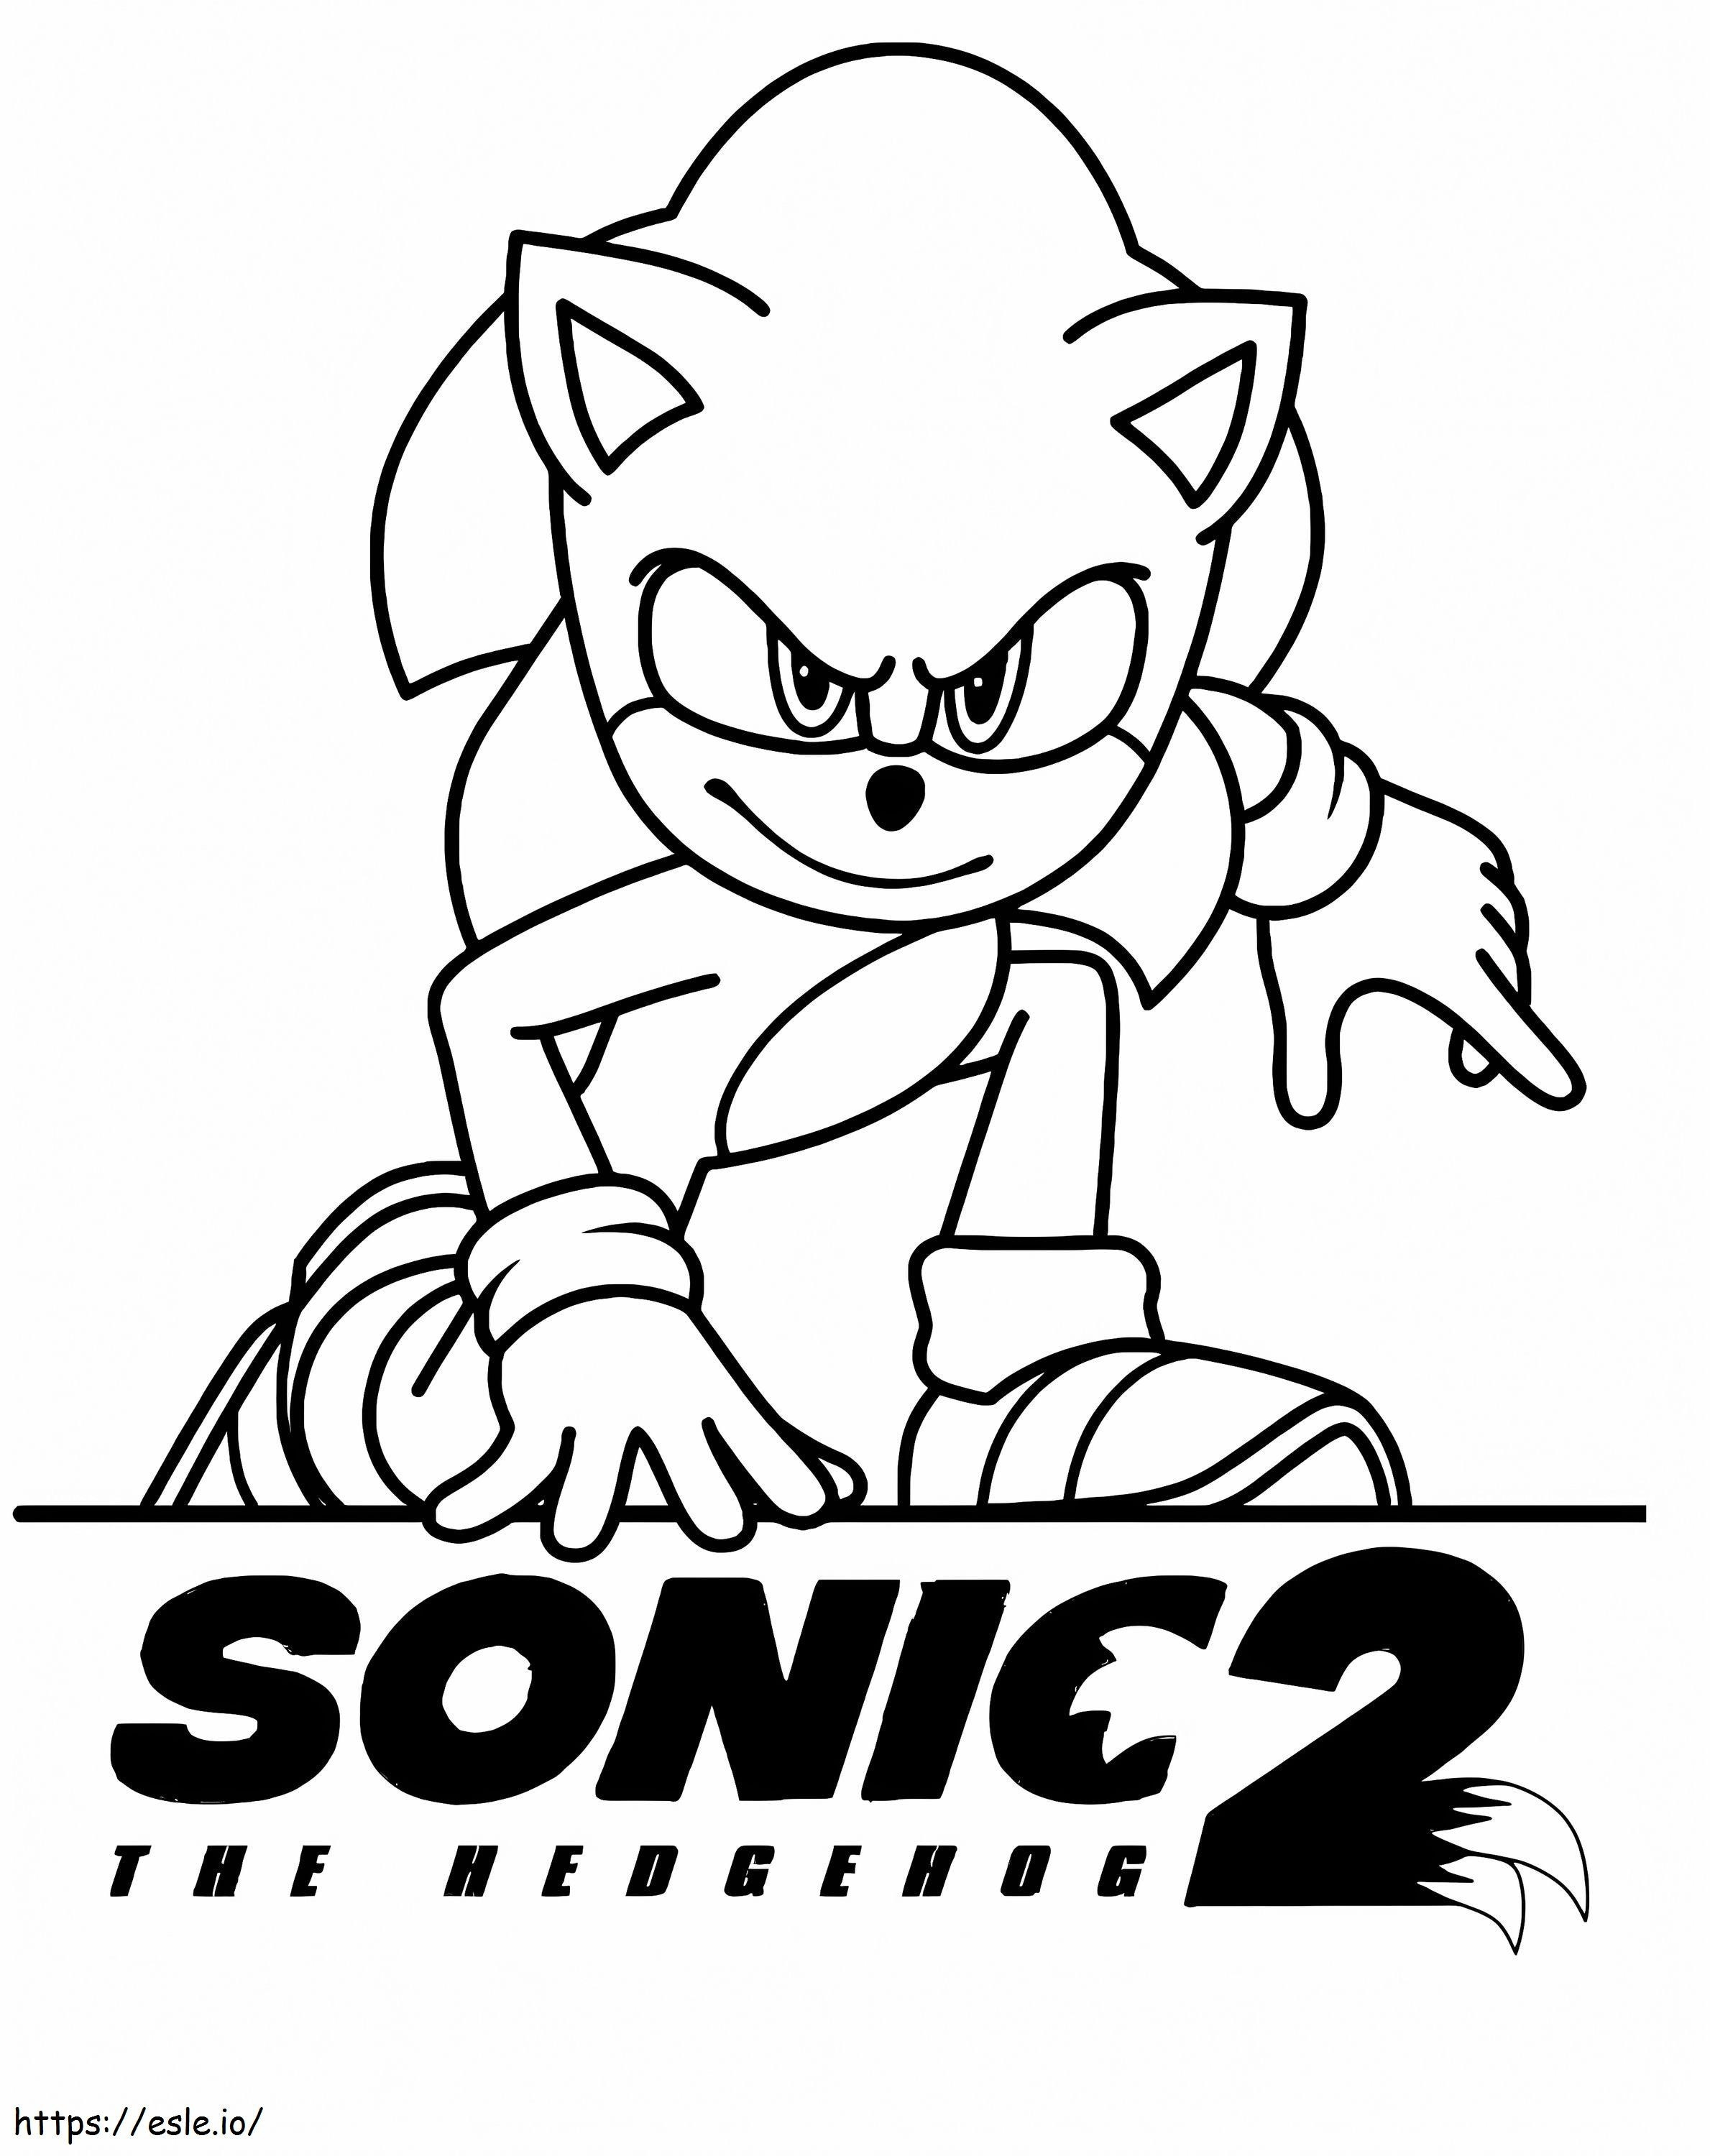 Sonic The Hedgehog2 kleurplaat kleurplaat